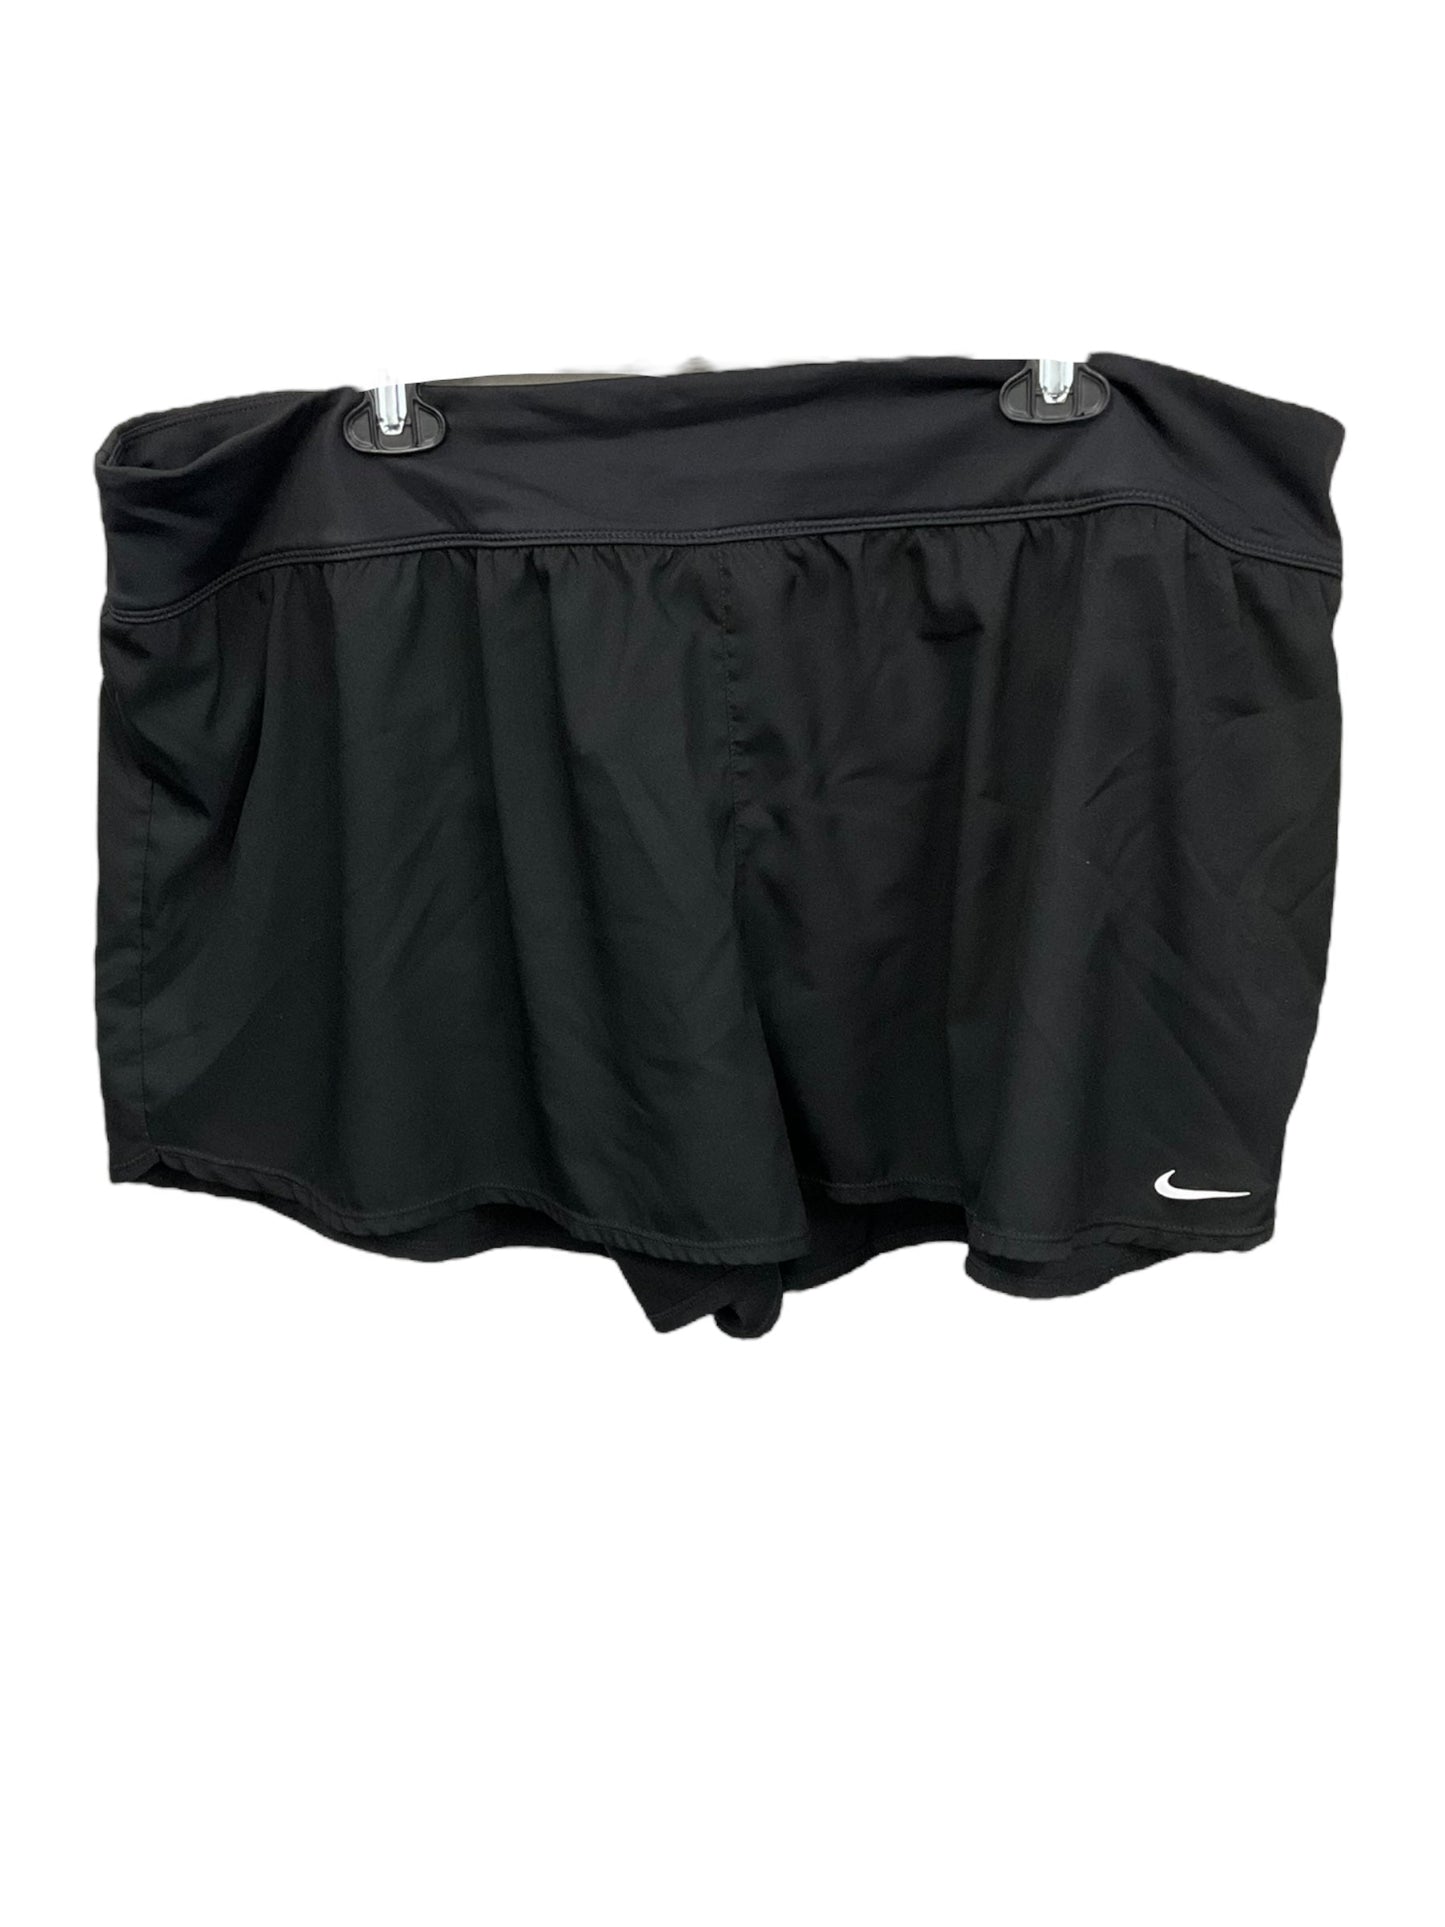 Black Athletic Shorts Nike Apparel, Size 3x